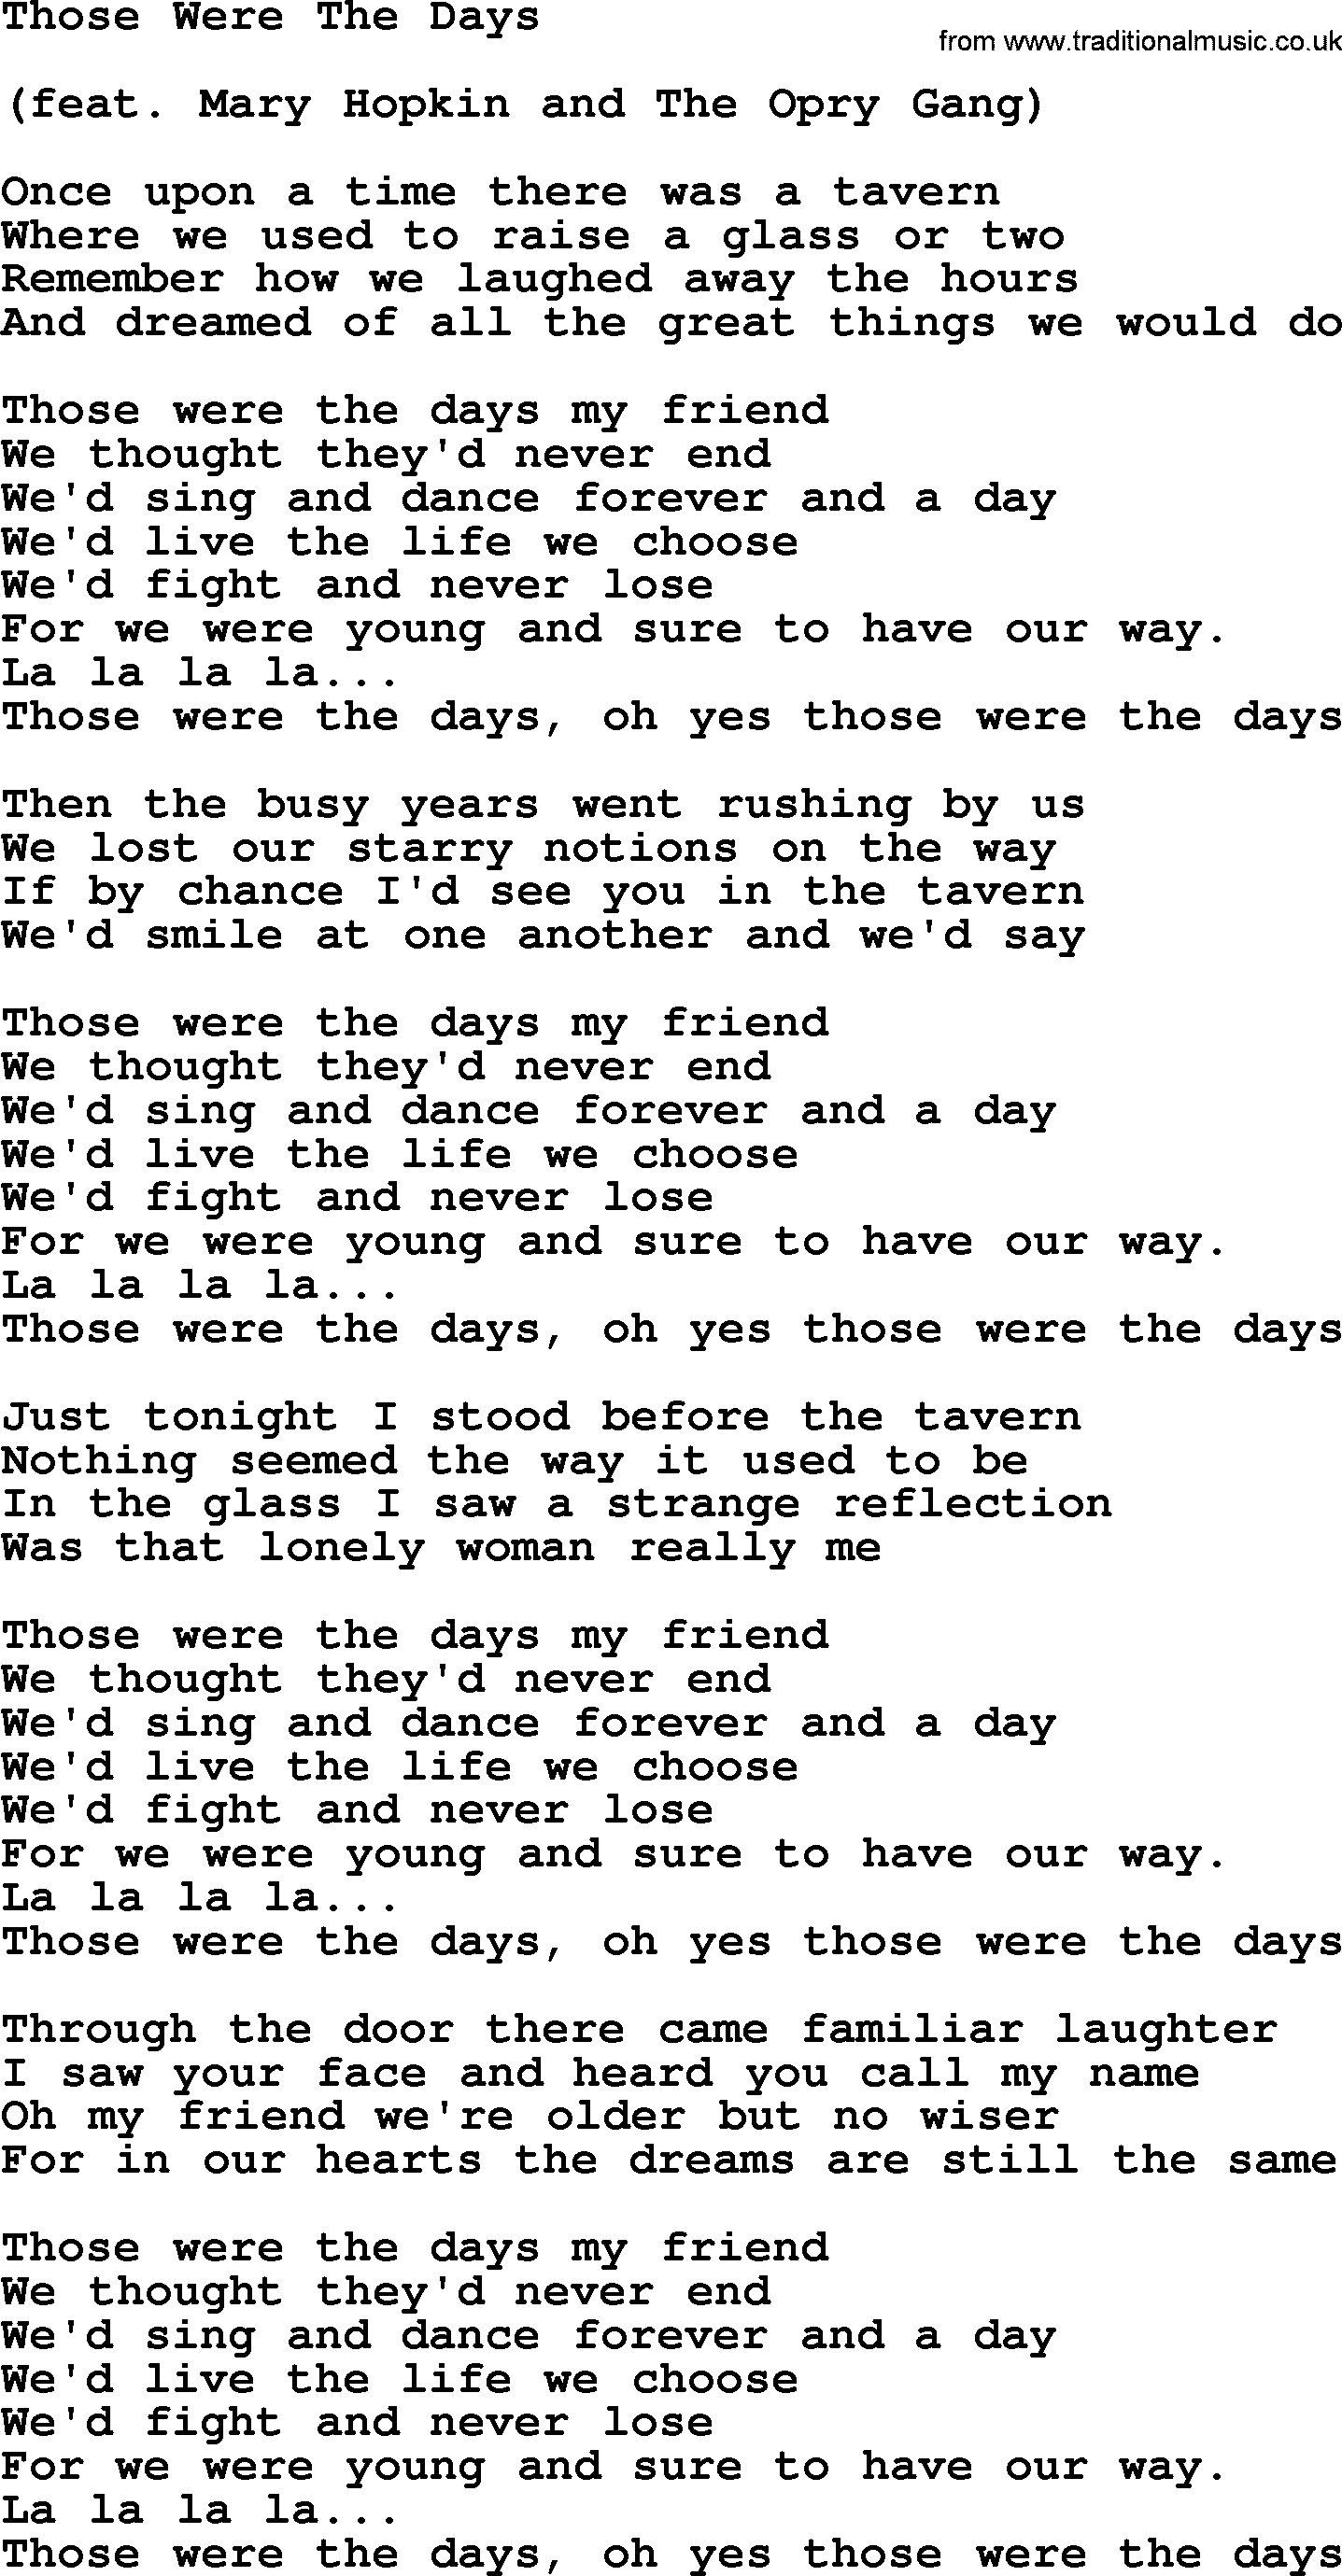 Dolly Parton song Those Were The Days.txt lyrics